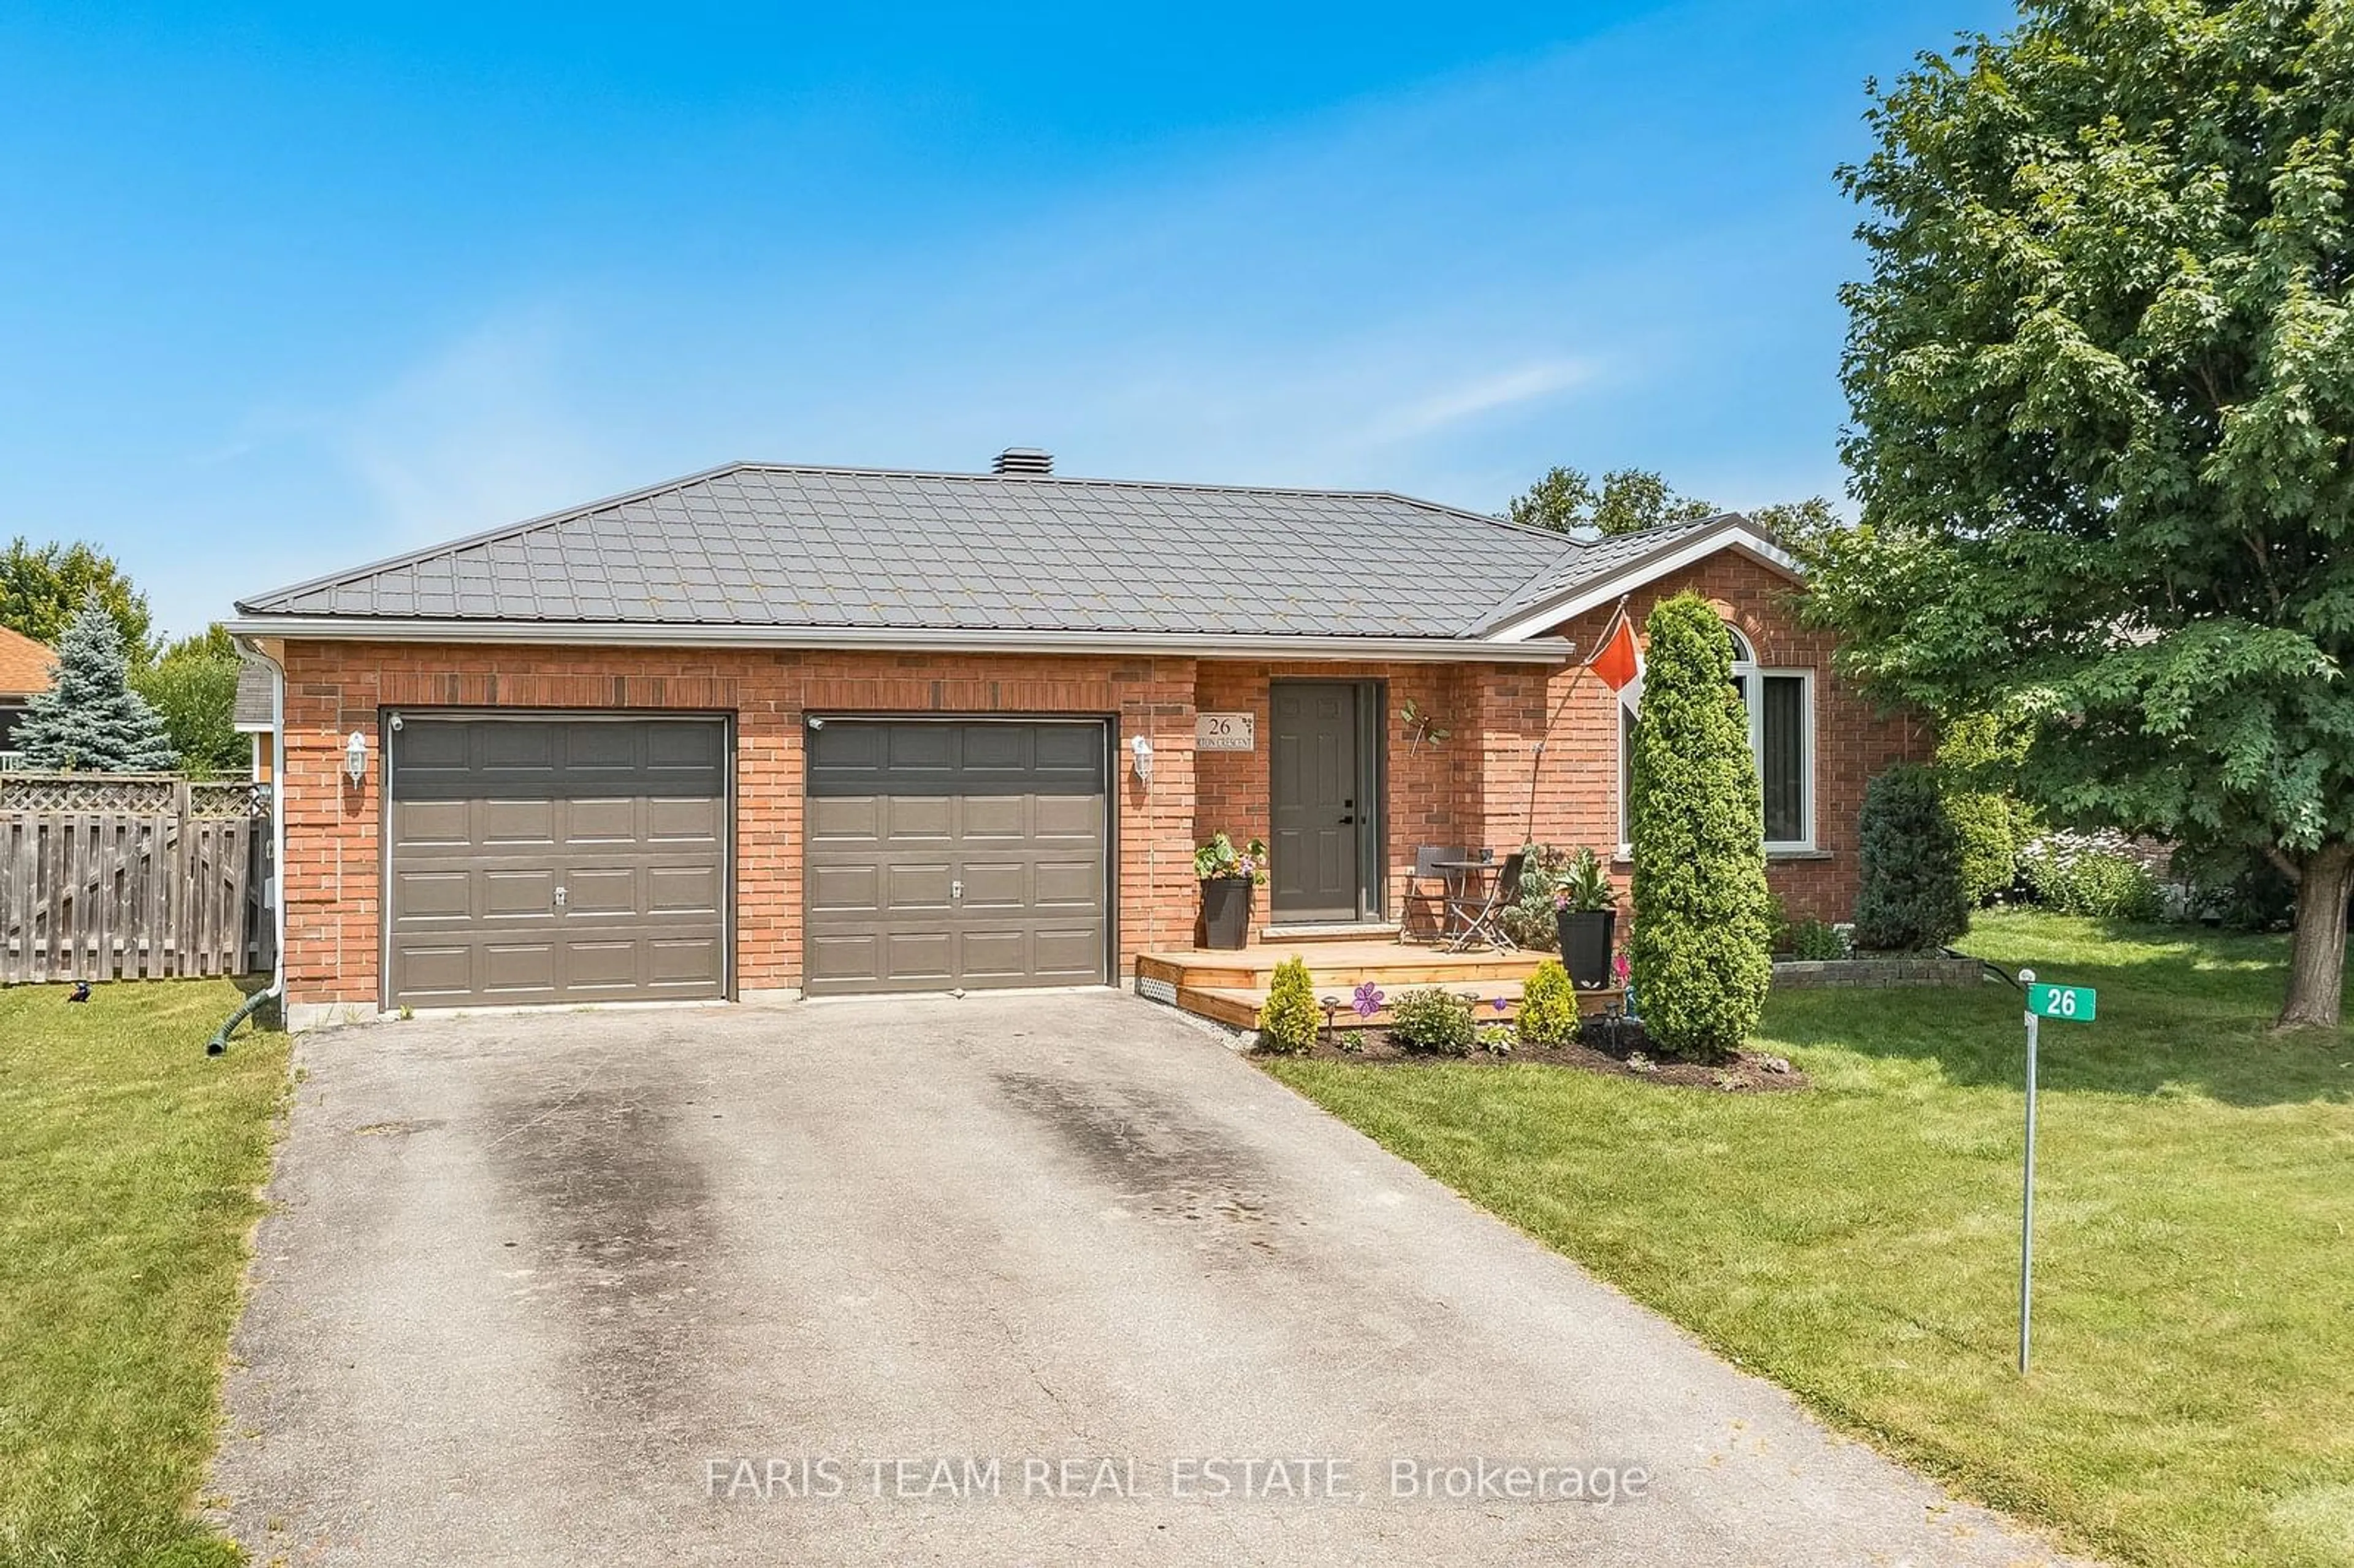 Home with brick exterior material for 26 Burton Cres, Springwater Ontario L0L 1P0